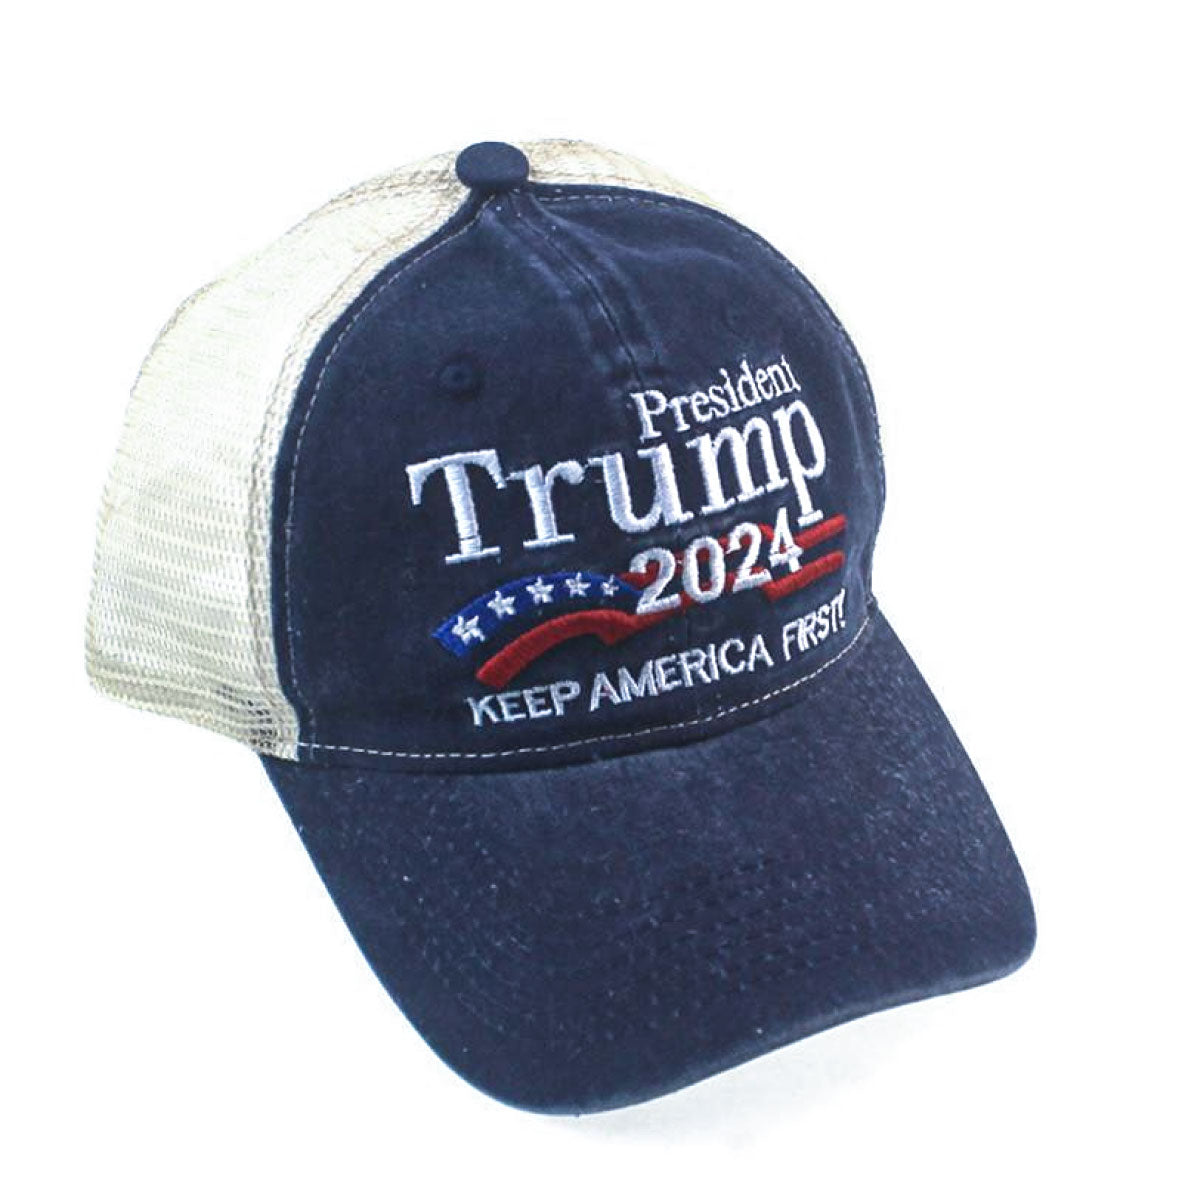 Keep America First Hat